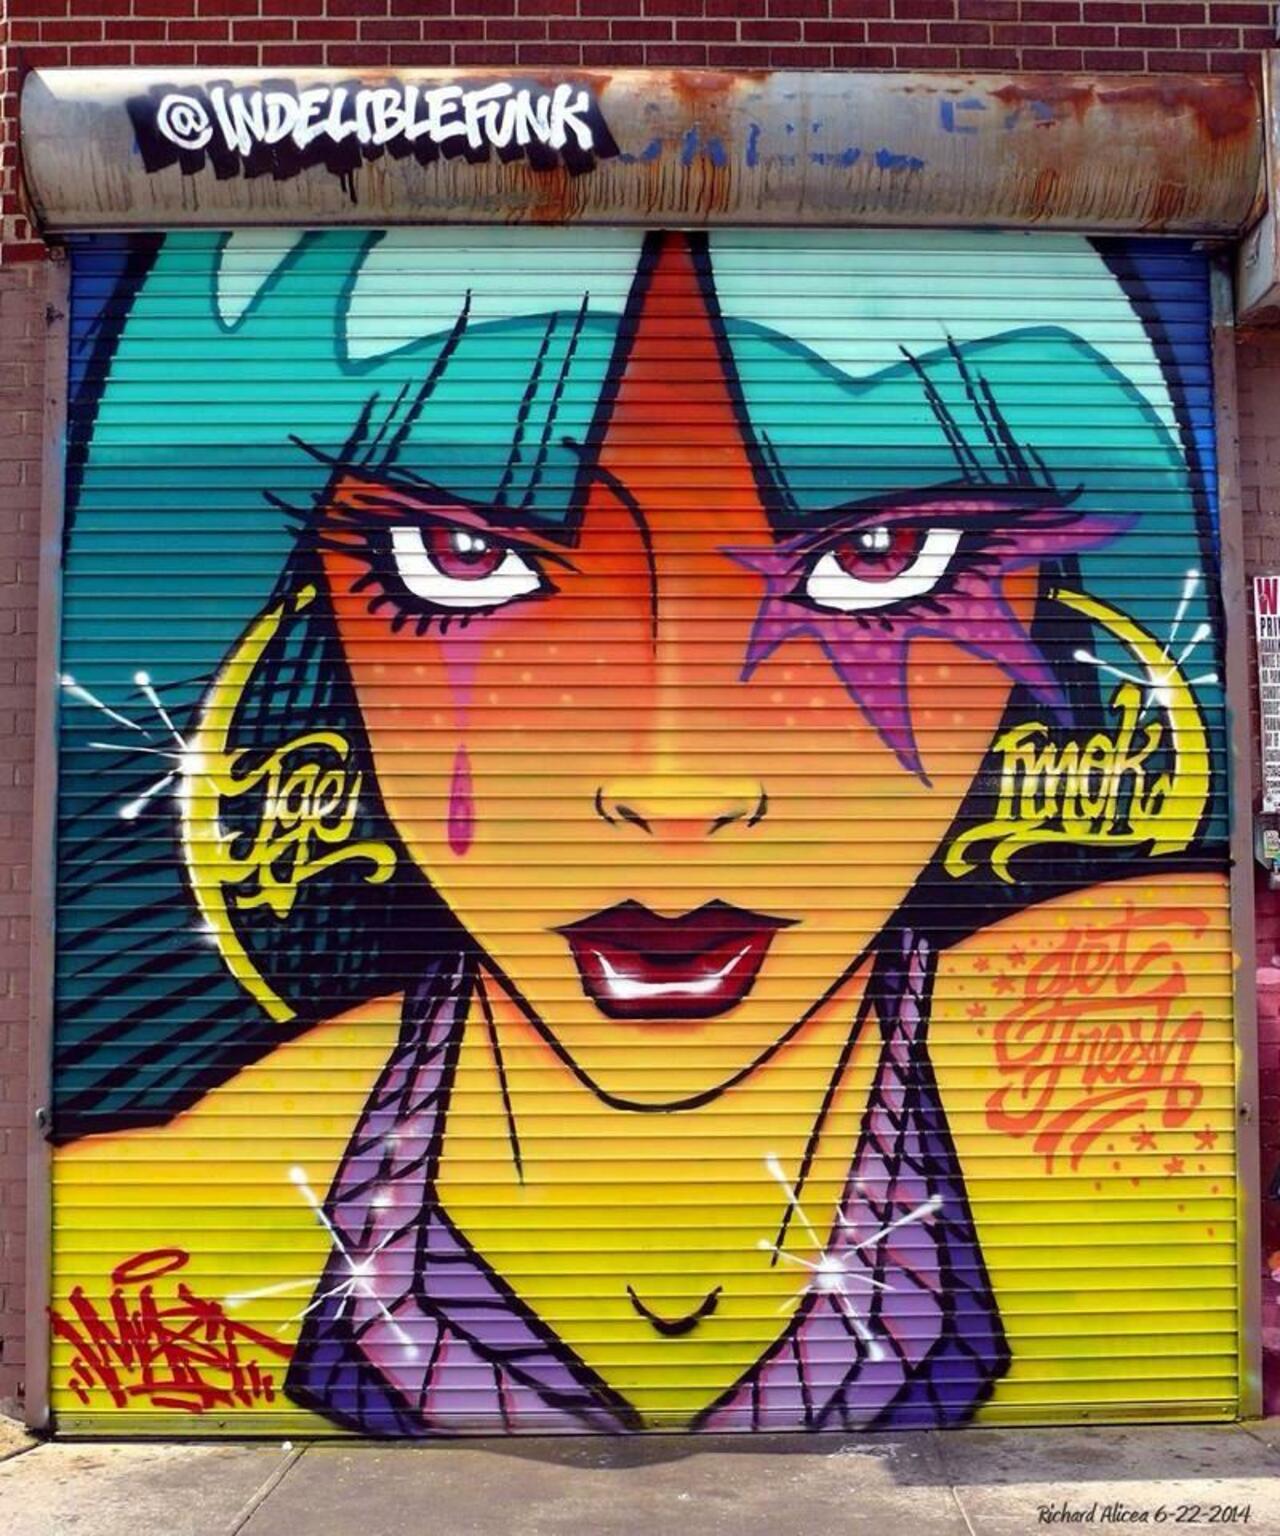 Artist 'Indeliblefunk' new Street Art work at Welling Court Queens, NY #art #mural #graffiti #streetart https://t.co/XHUyWUiczh